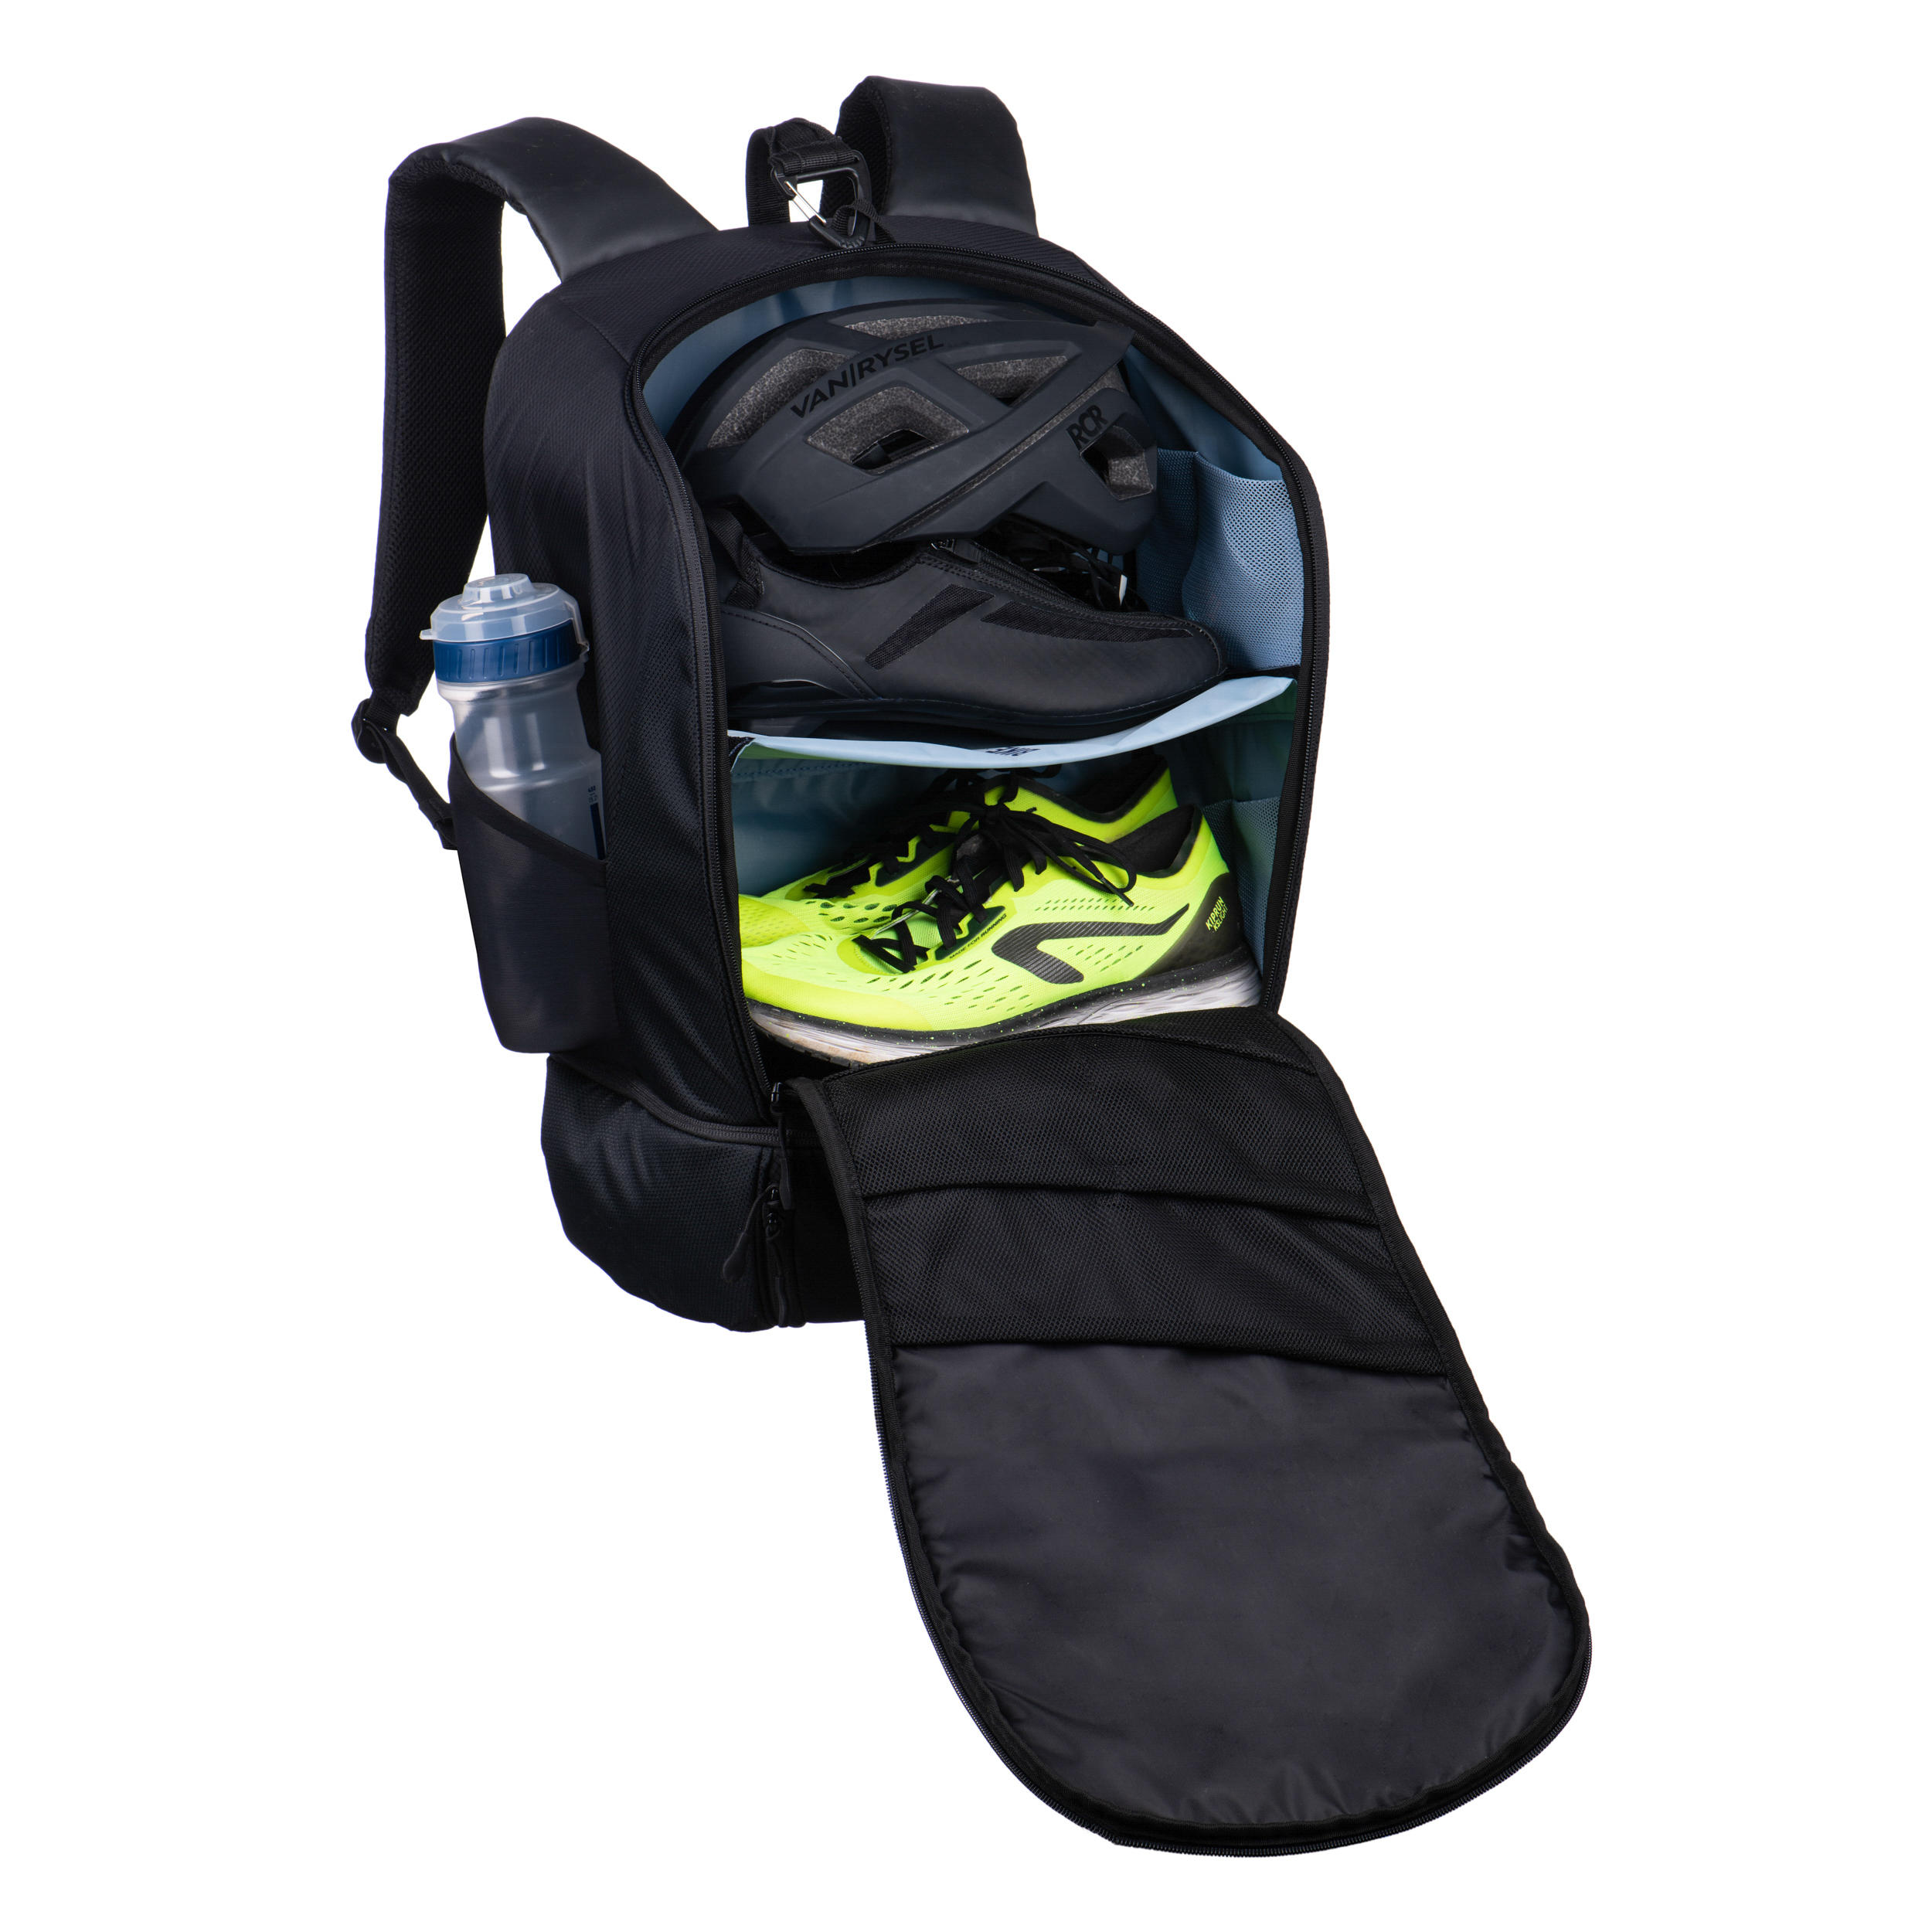 Aptonia Triathlon Transition Bag 35L - Black/Blue 10/10